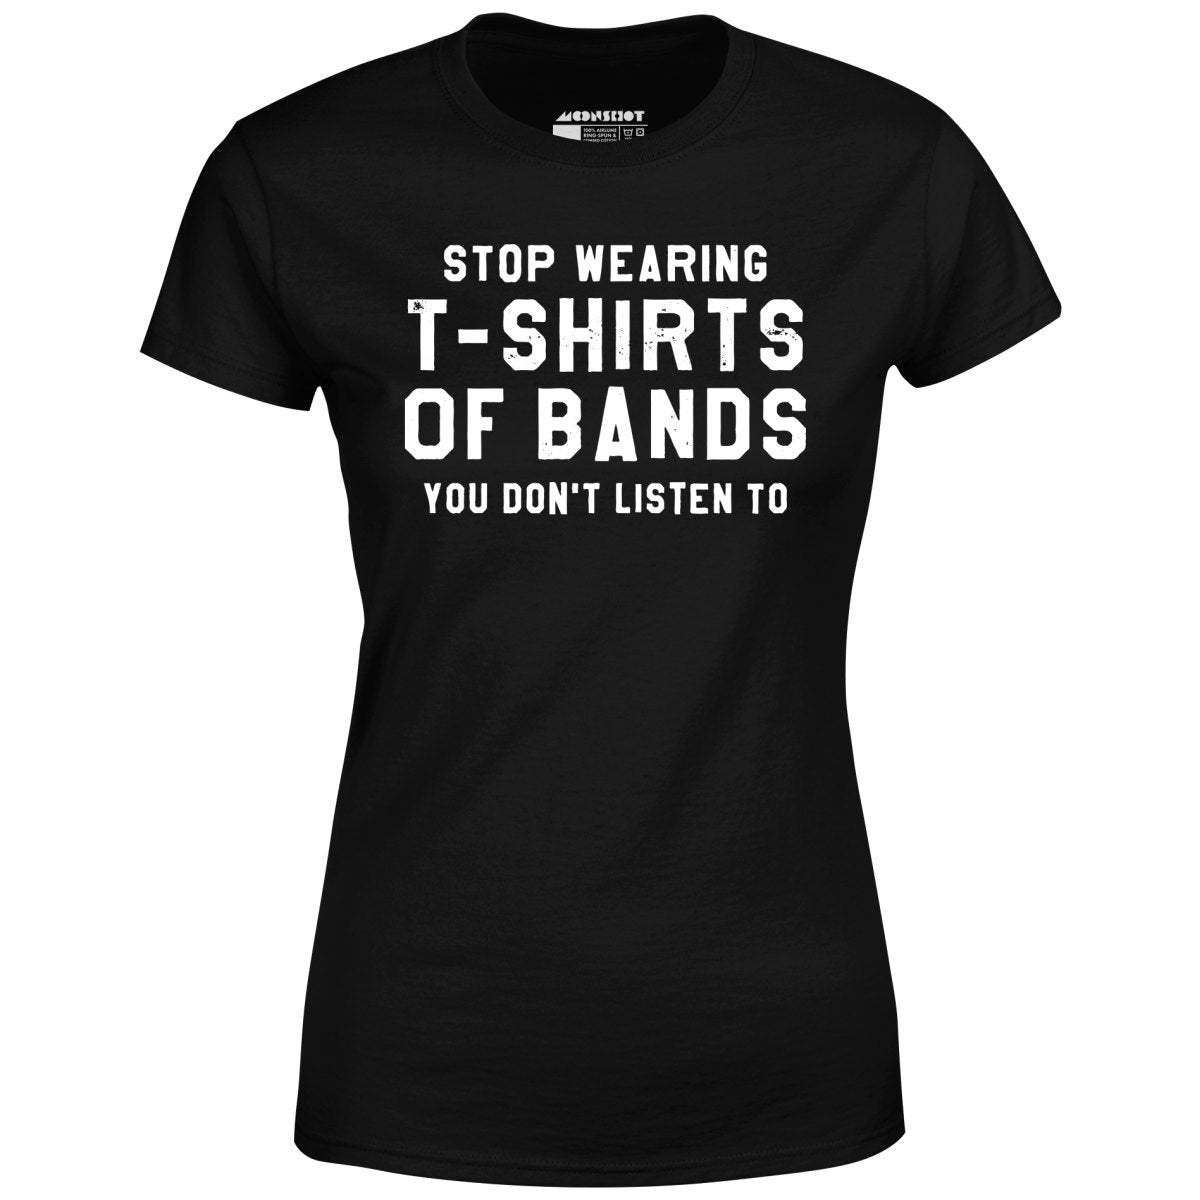 Stop Wearing T-Shirts of Bands You Don't Listen To - Women's T-Shirt